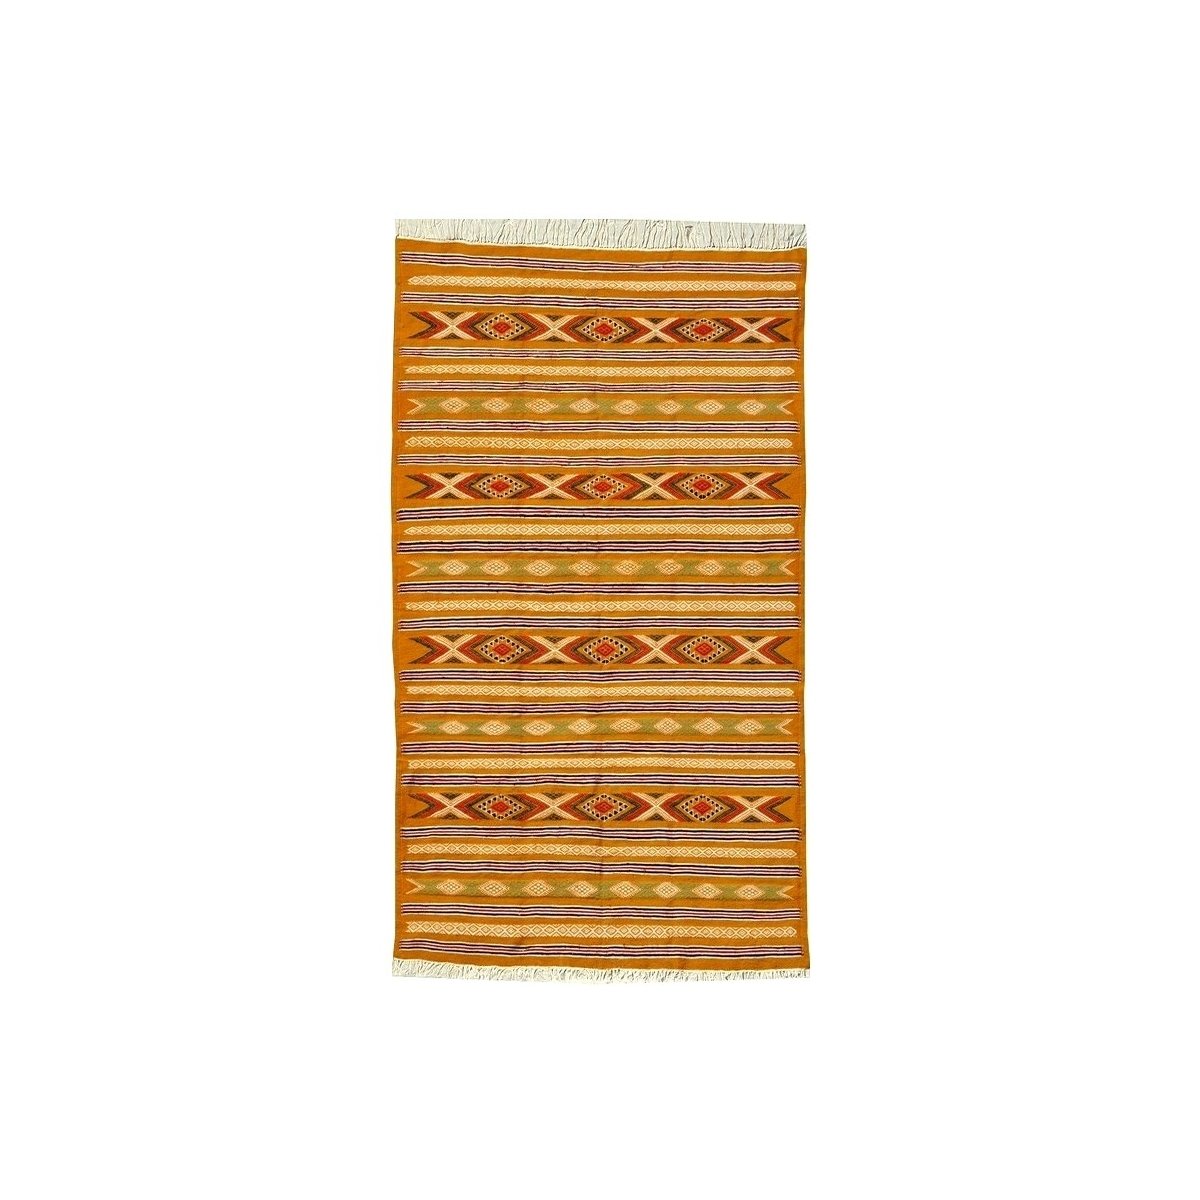 Berber tapijt Tapijt Kilim Chemtou 145x250 Geel/Wit (Handgeweven, Wol, Tunesië) Tunesisch kilimdeken, Marokkaanse stijl. Rechtho